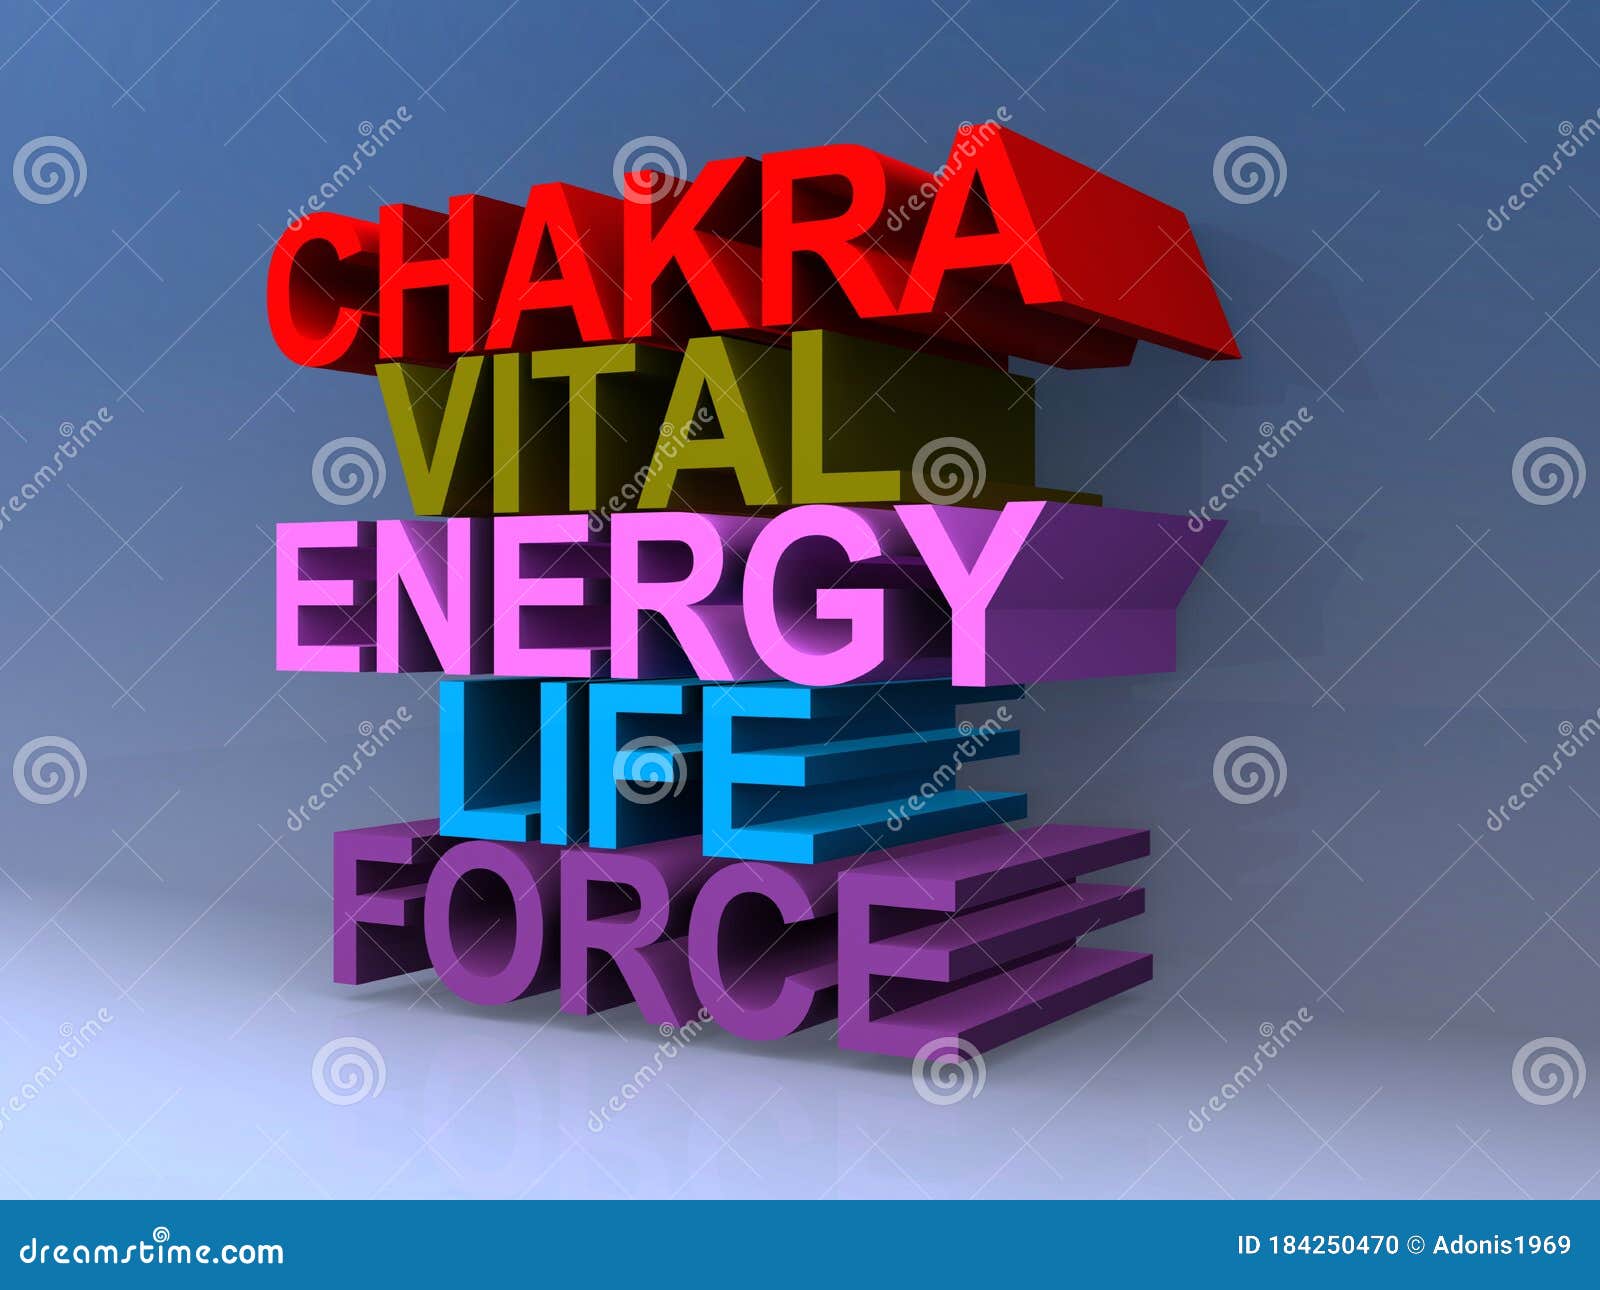 chakra vital energy life force